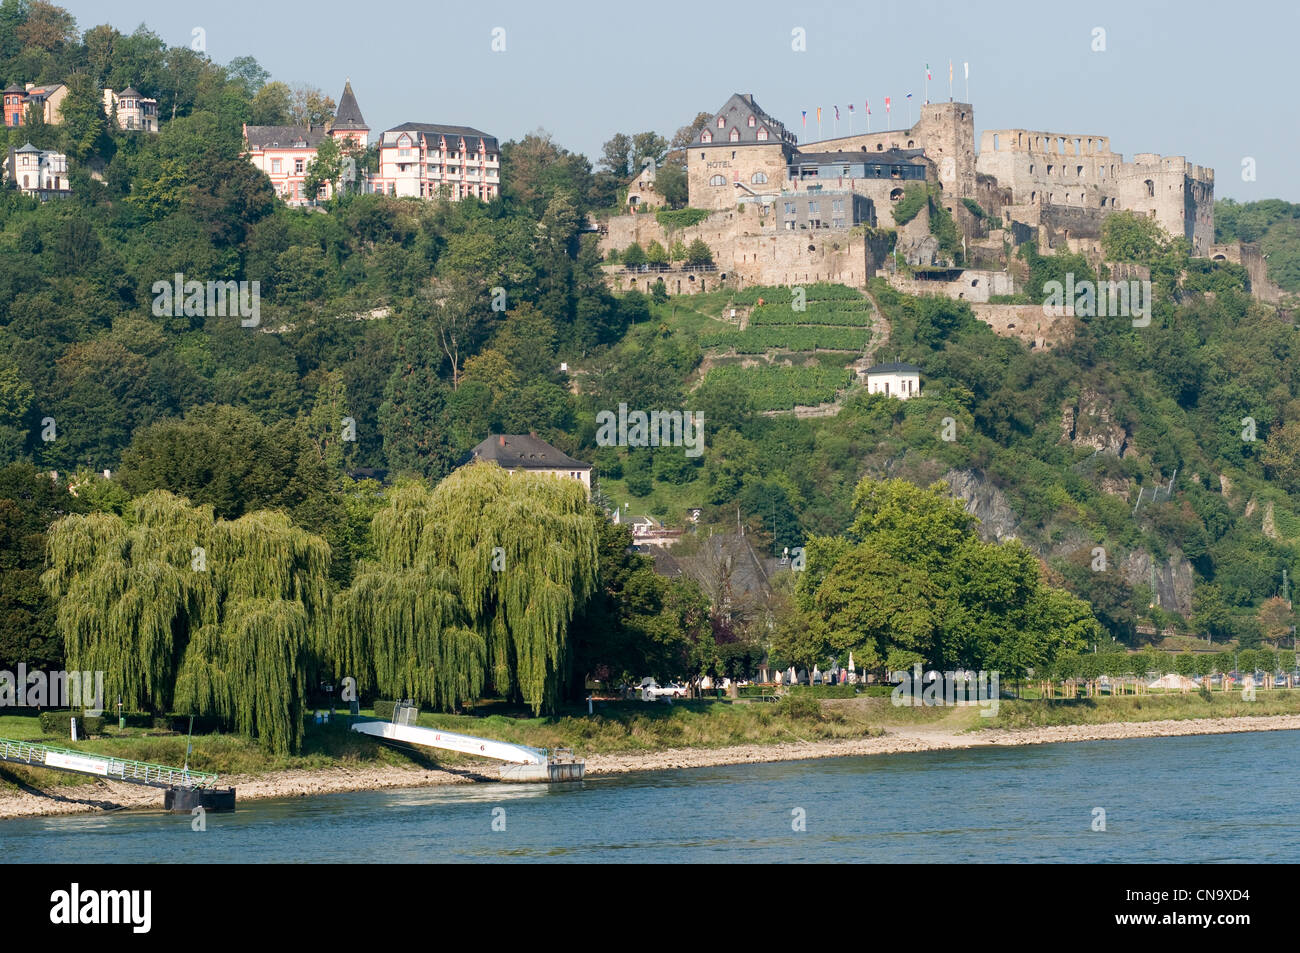 Germany, Rhineland Palatinate, castle of Rheinfels, the romantic Rhine listed as World Heritage by UNESCO Stock Photo